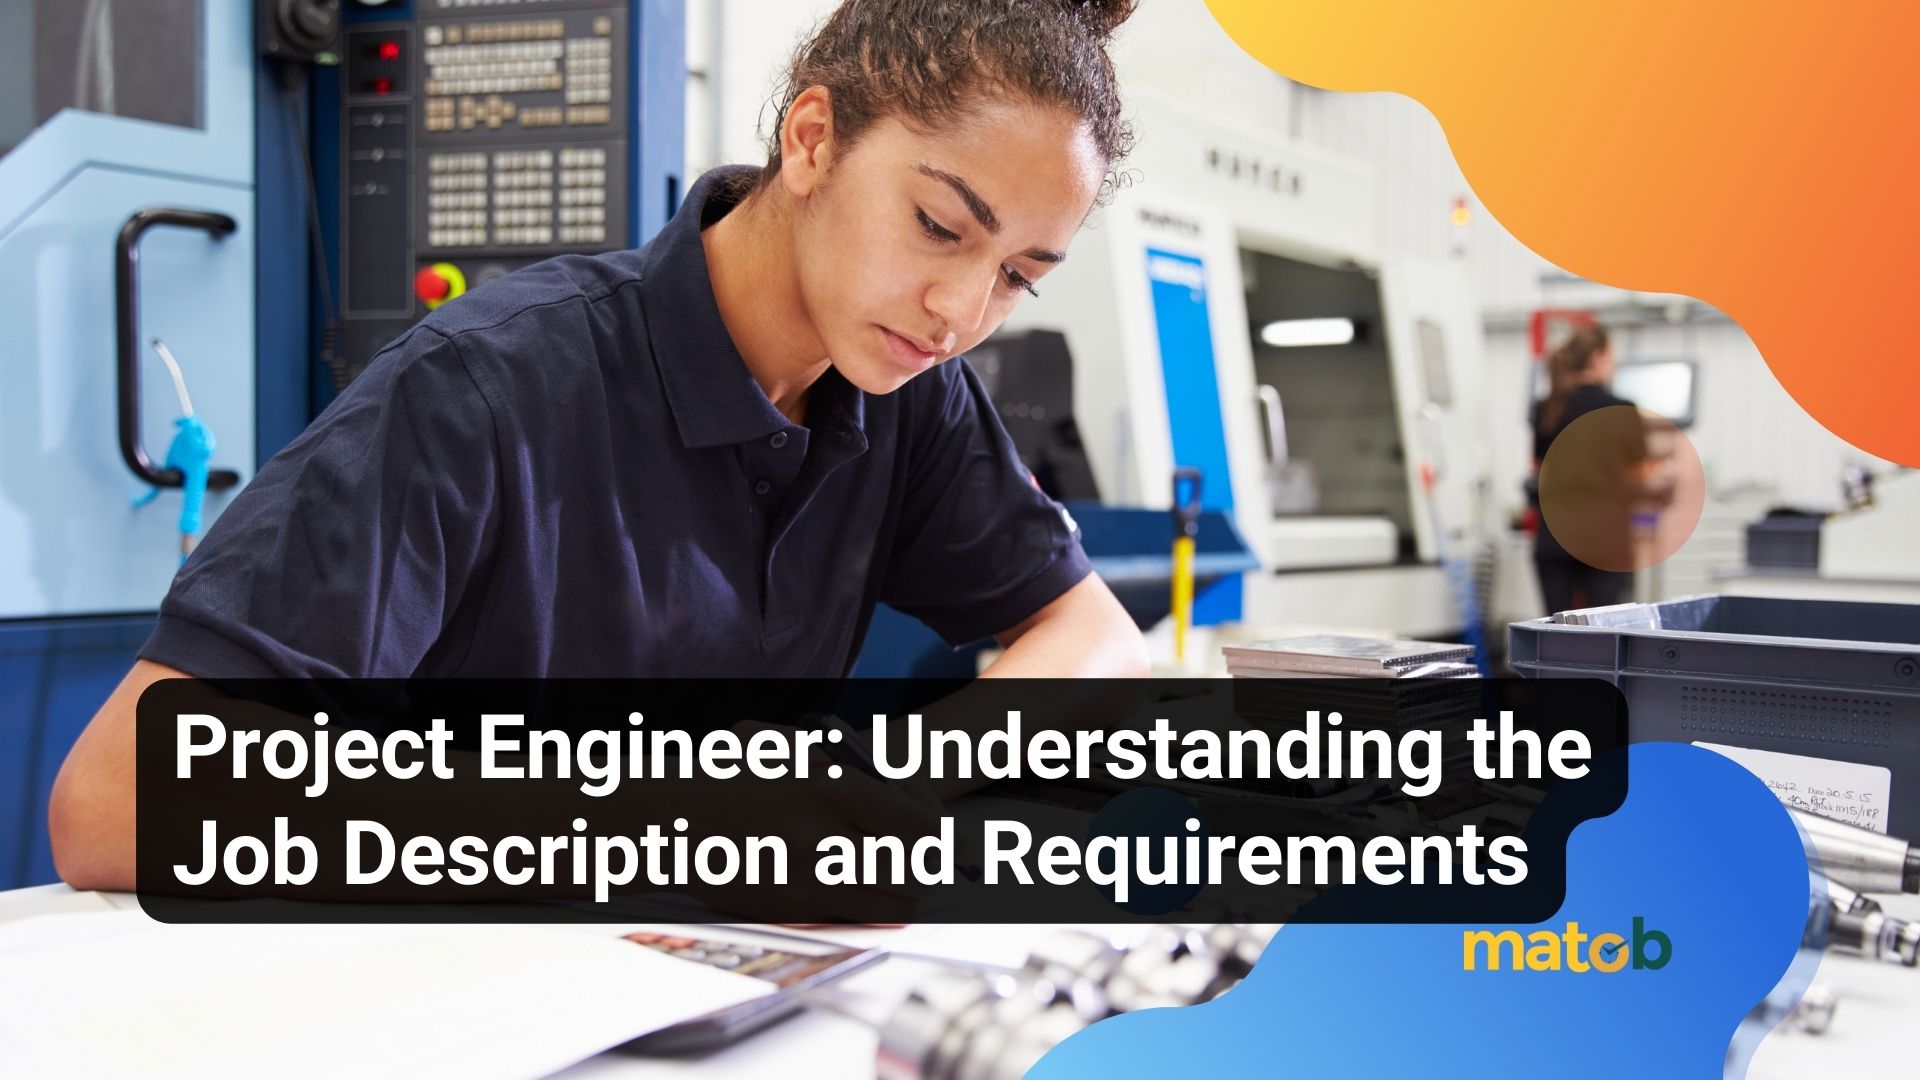 Project Engineer: Understanding the Job Description and Requirements